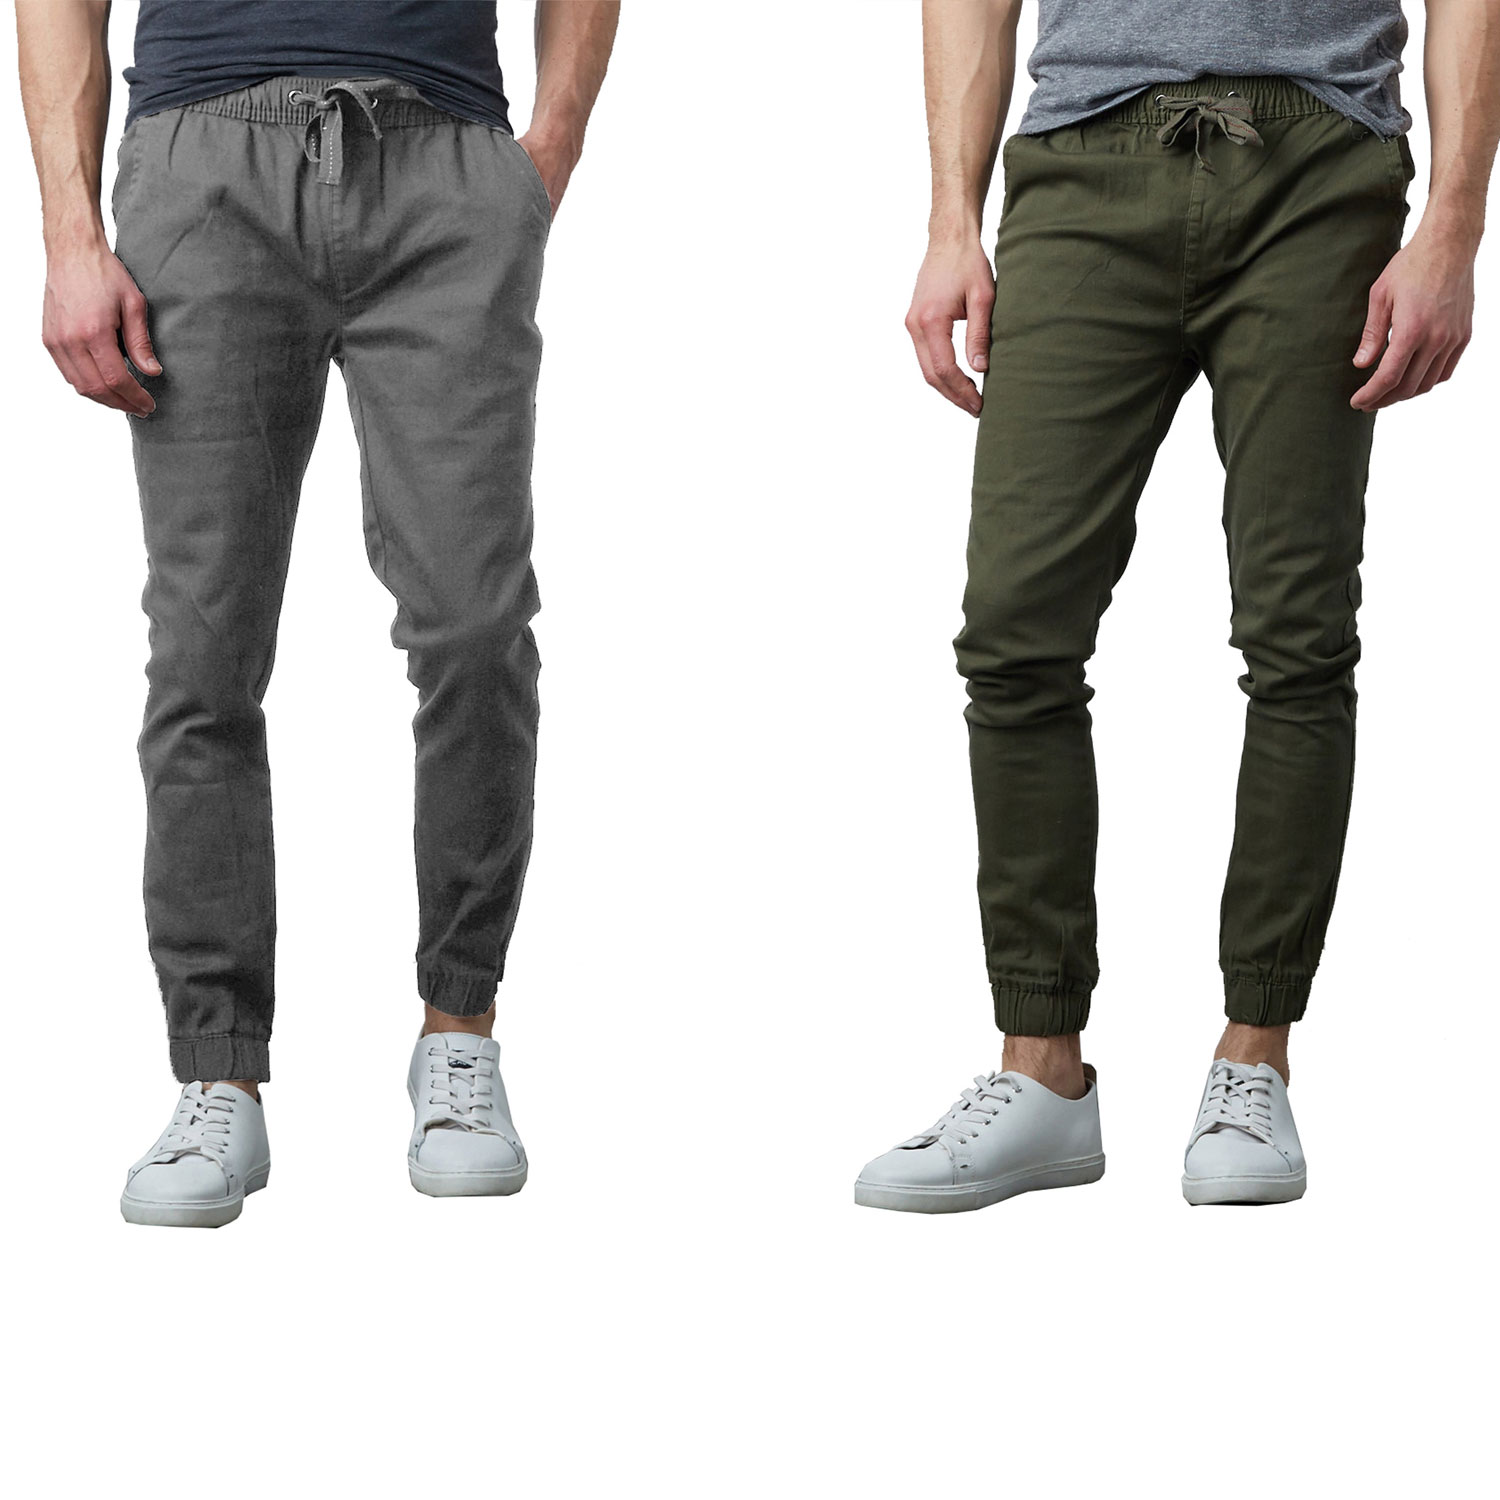 Men's Jogger Pants Slim-fit Cotton Twill  - 2 Pack